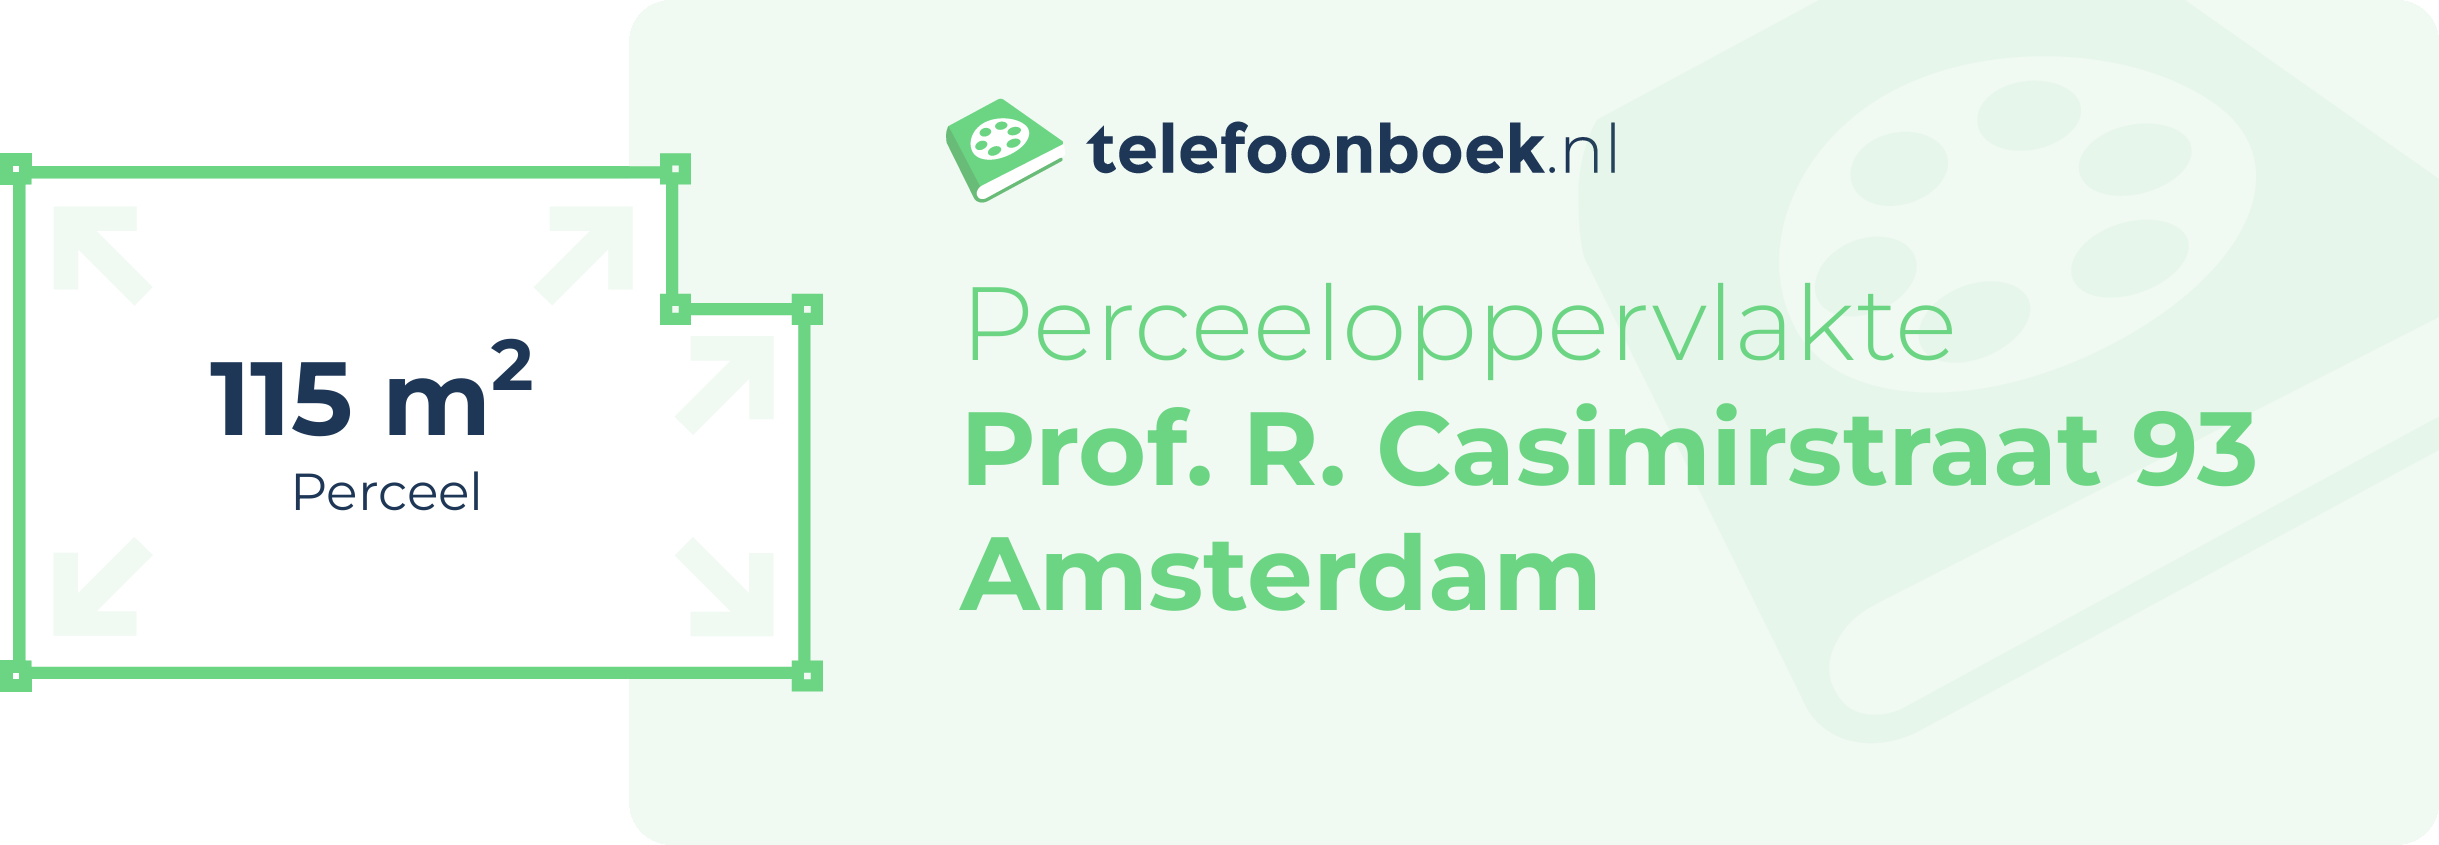 Perceeloppervlakte Prof. R. Casimirstraat 93 Amsterdam